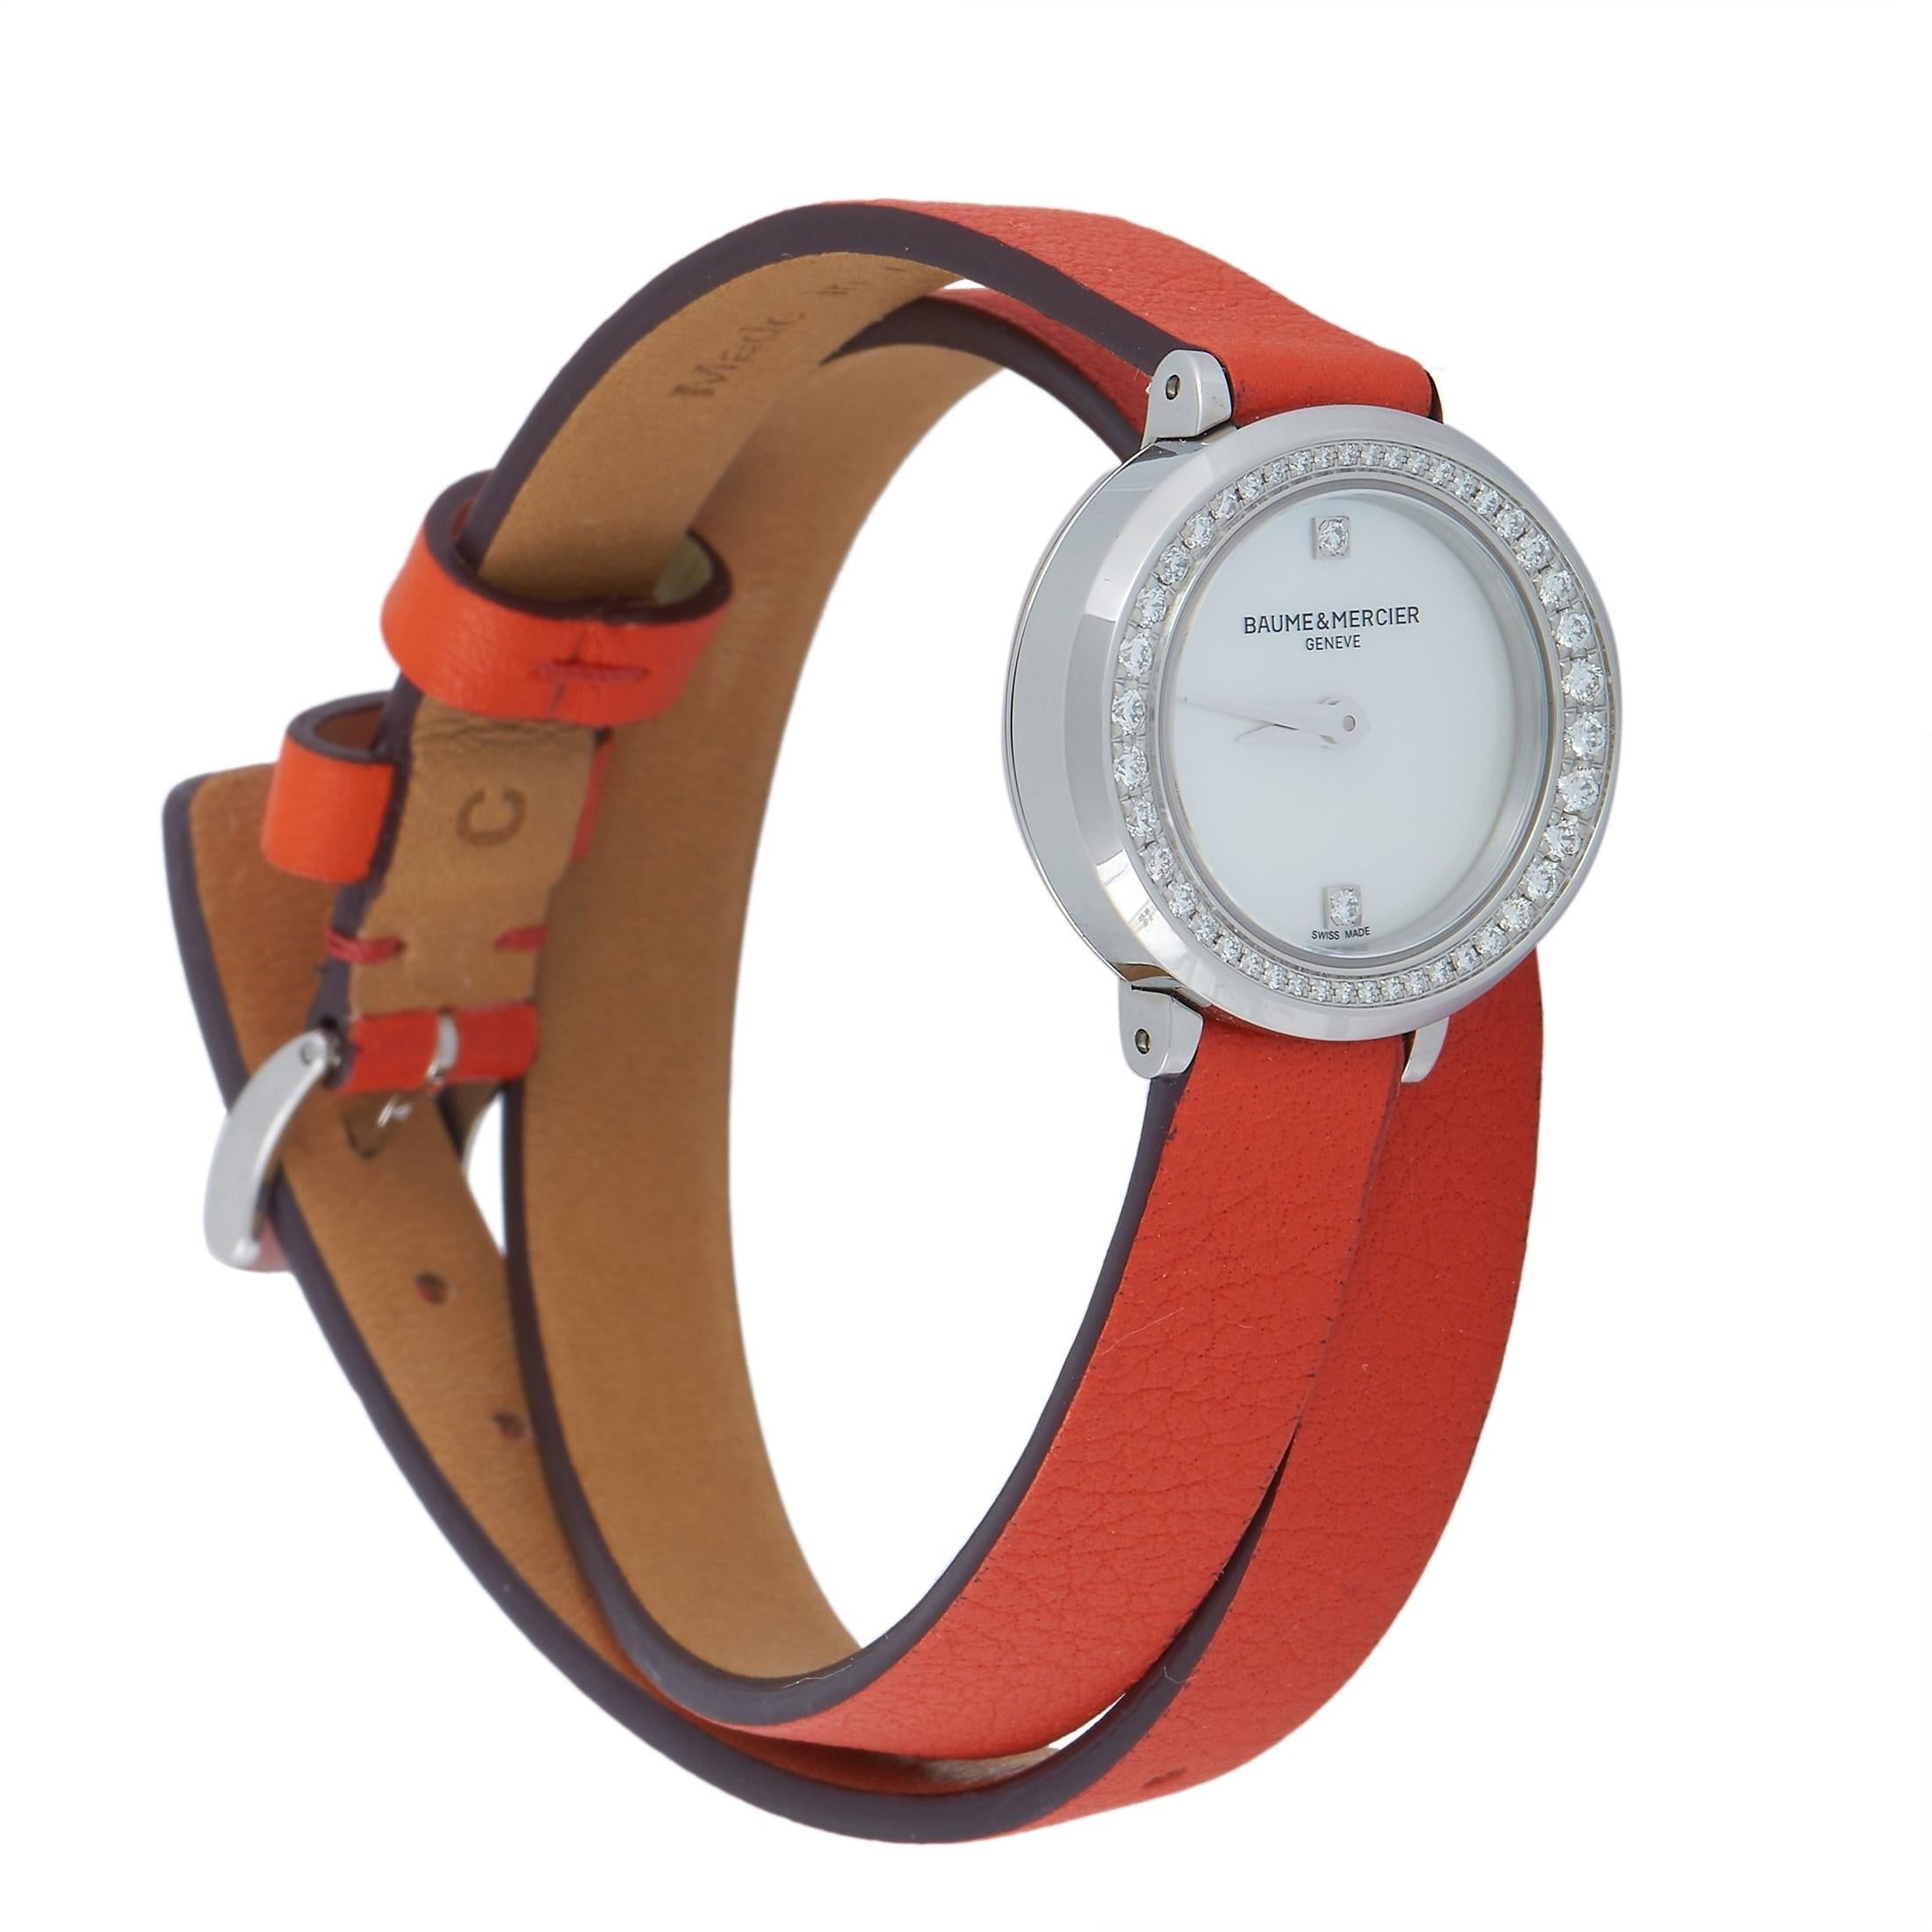 baume & mercier petite promesse orange strap watch - 10290